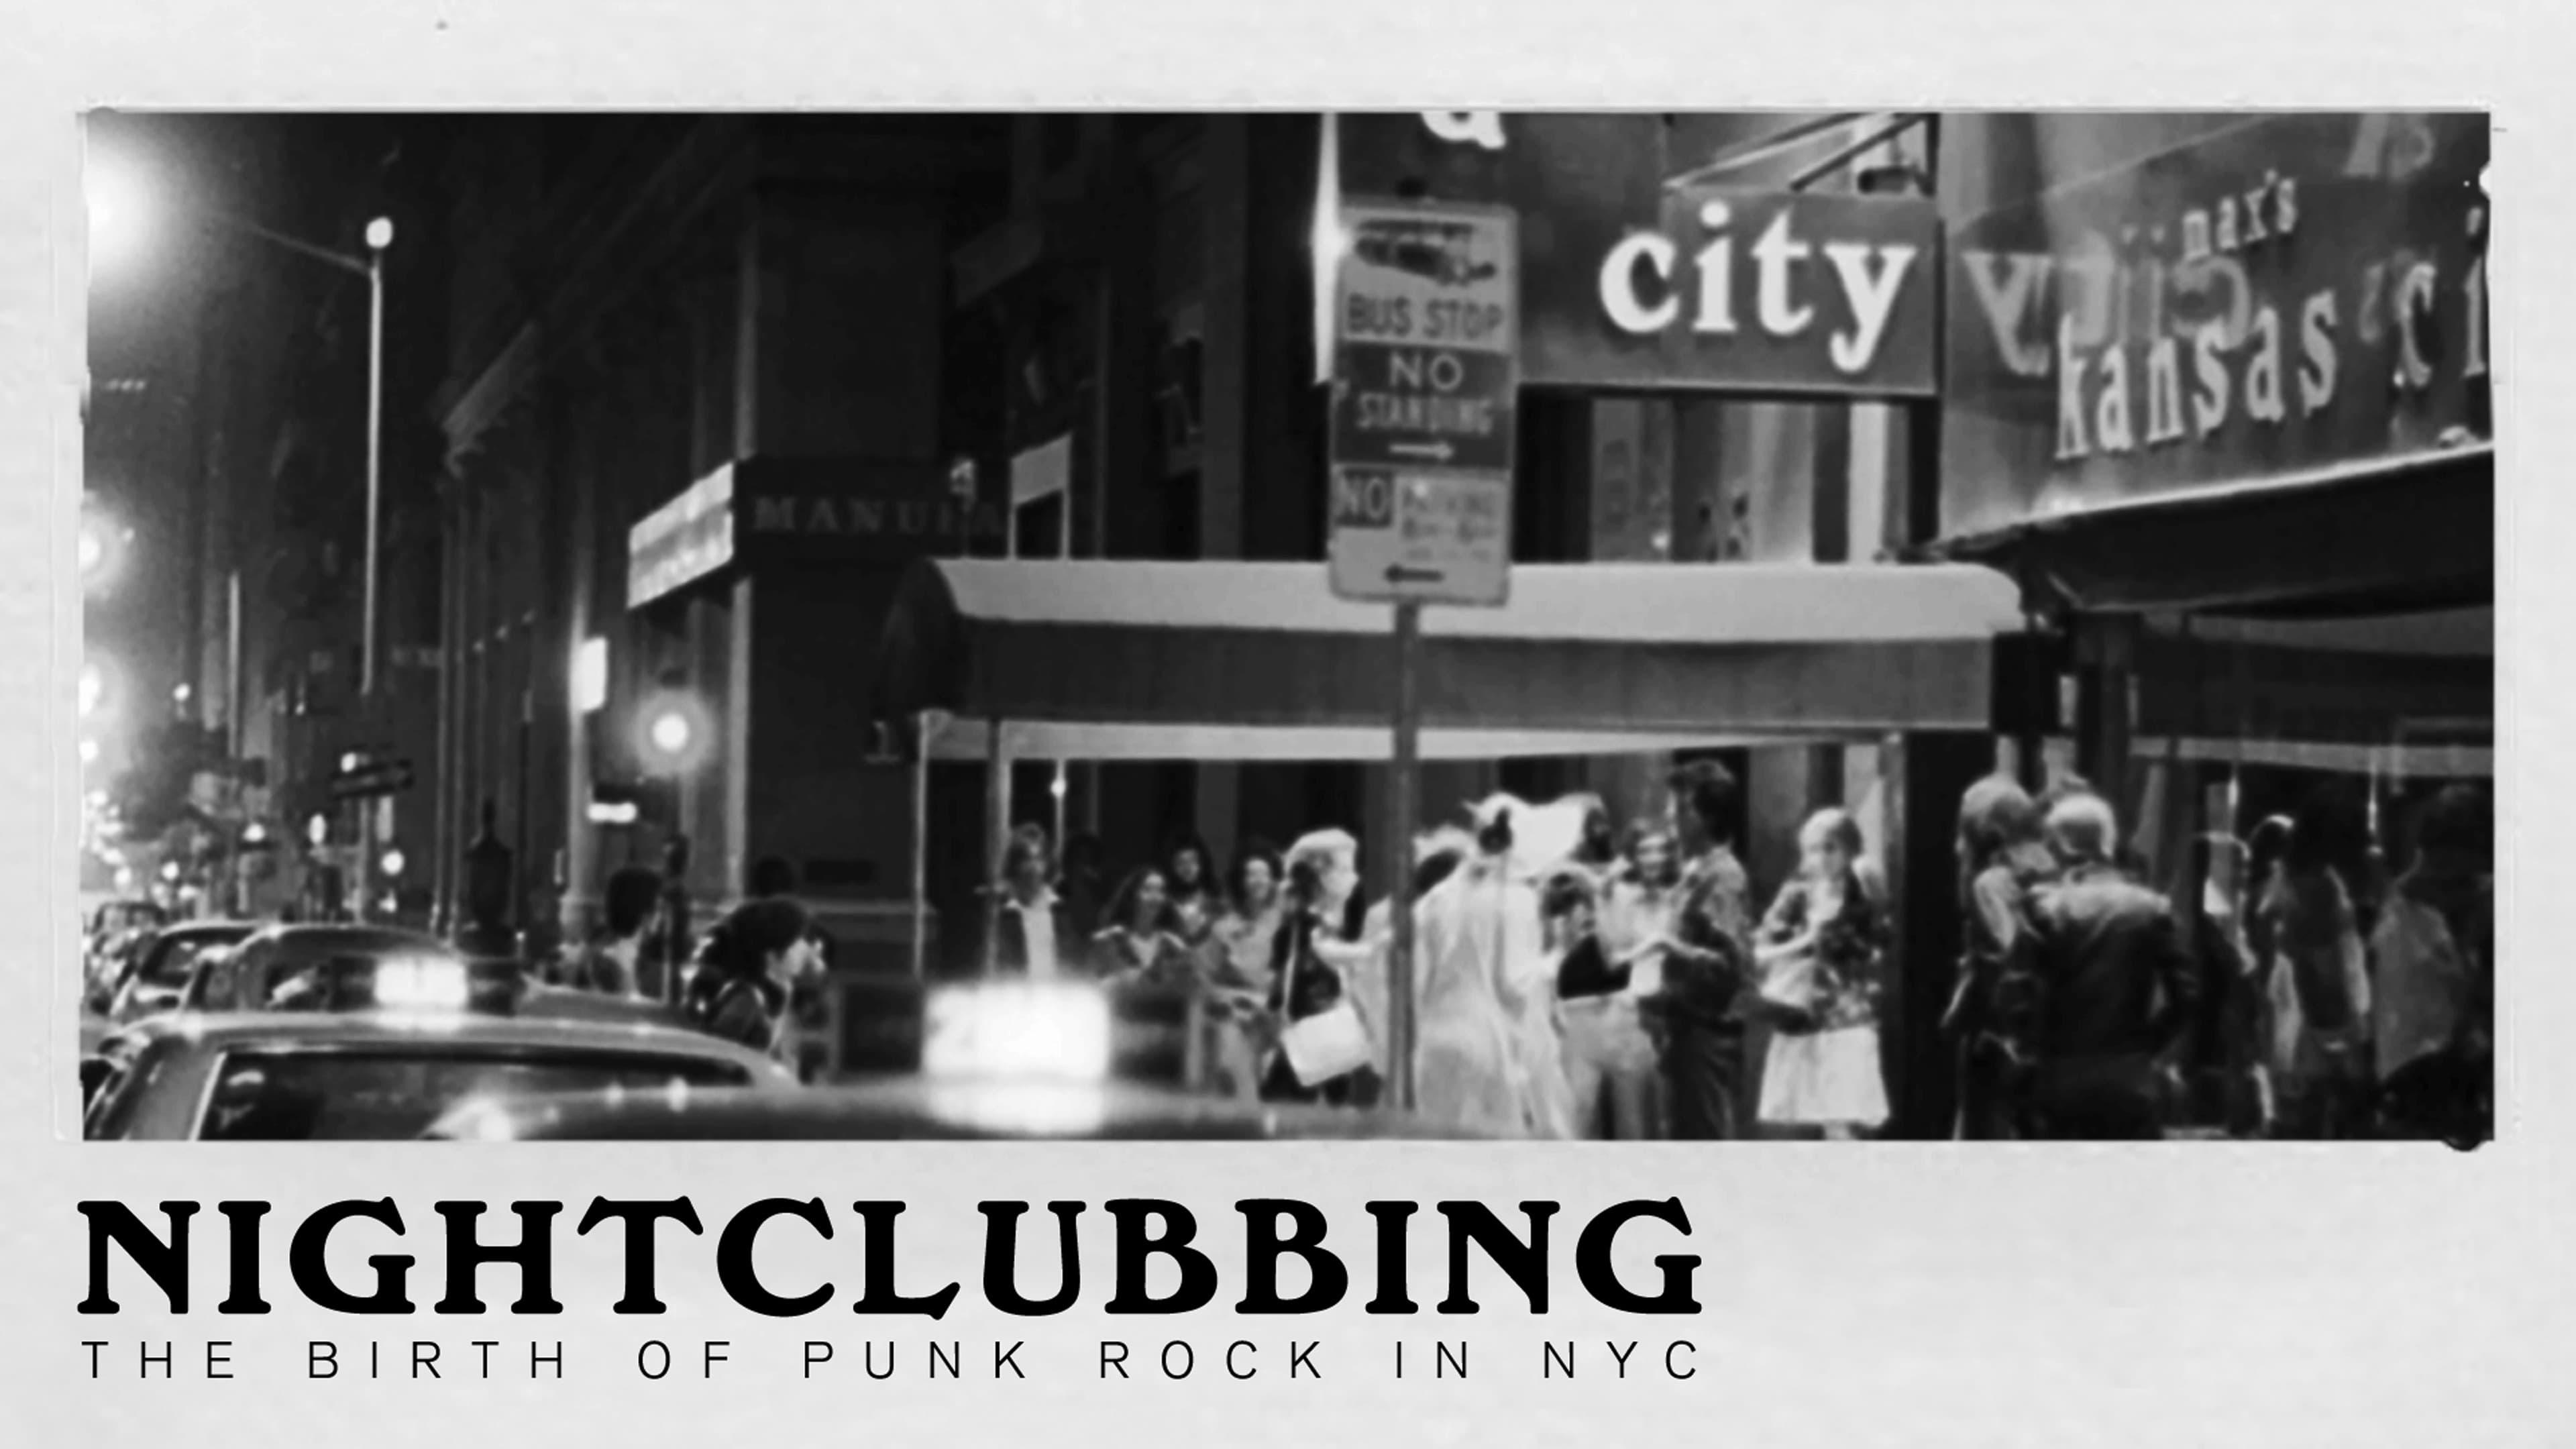 Nightclubbing: The Birth of Punk Rock in NYC backdrop